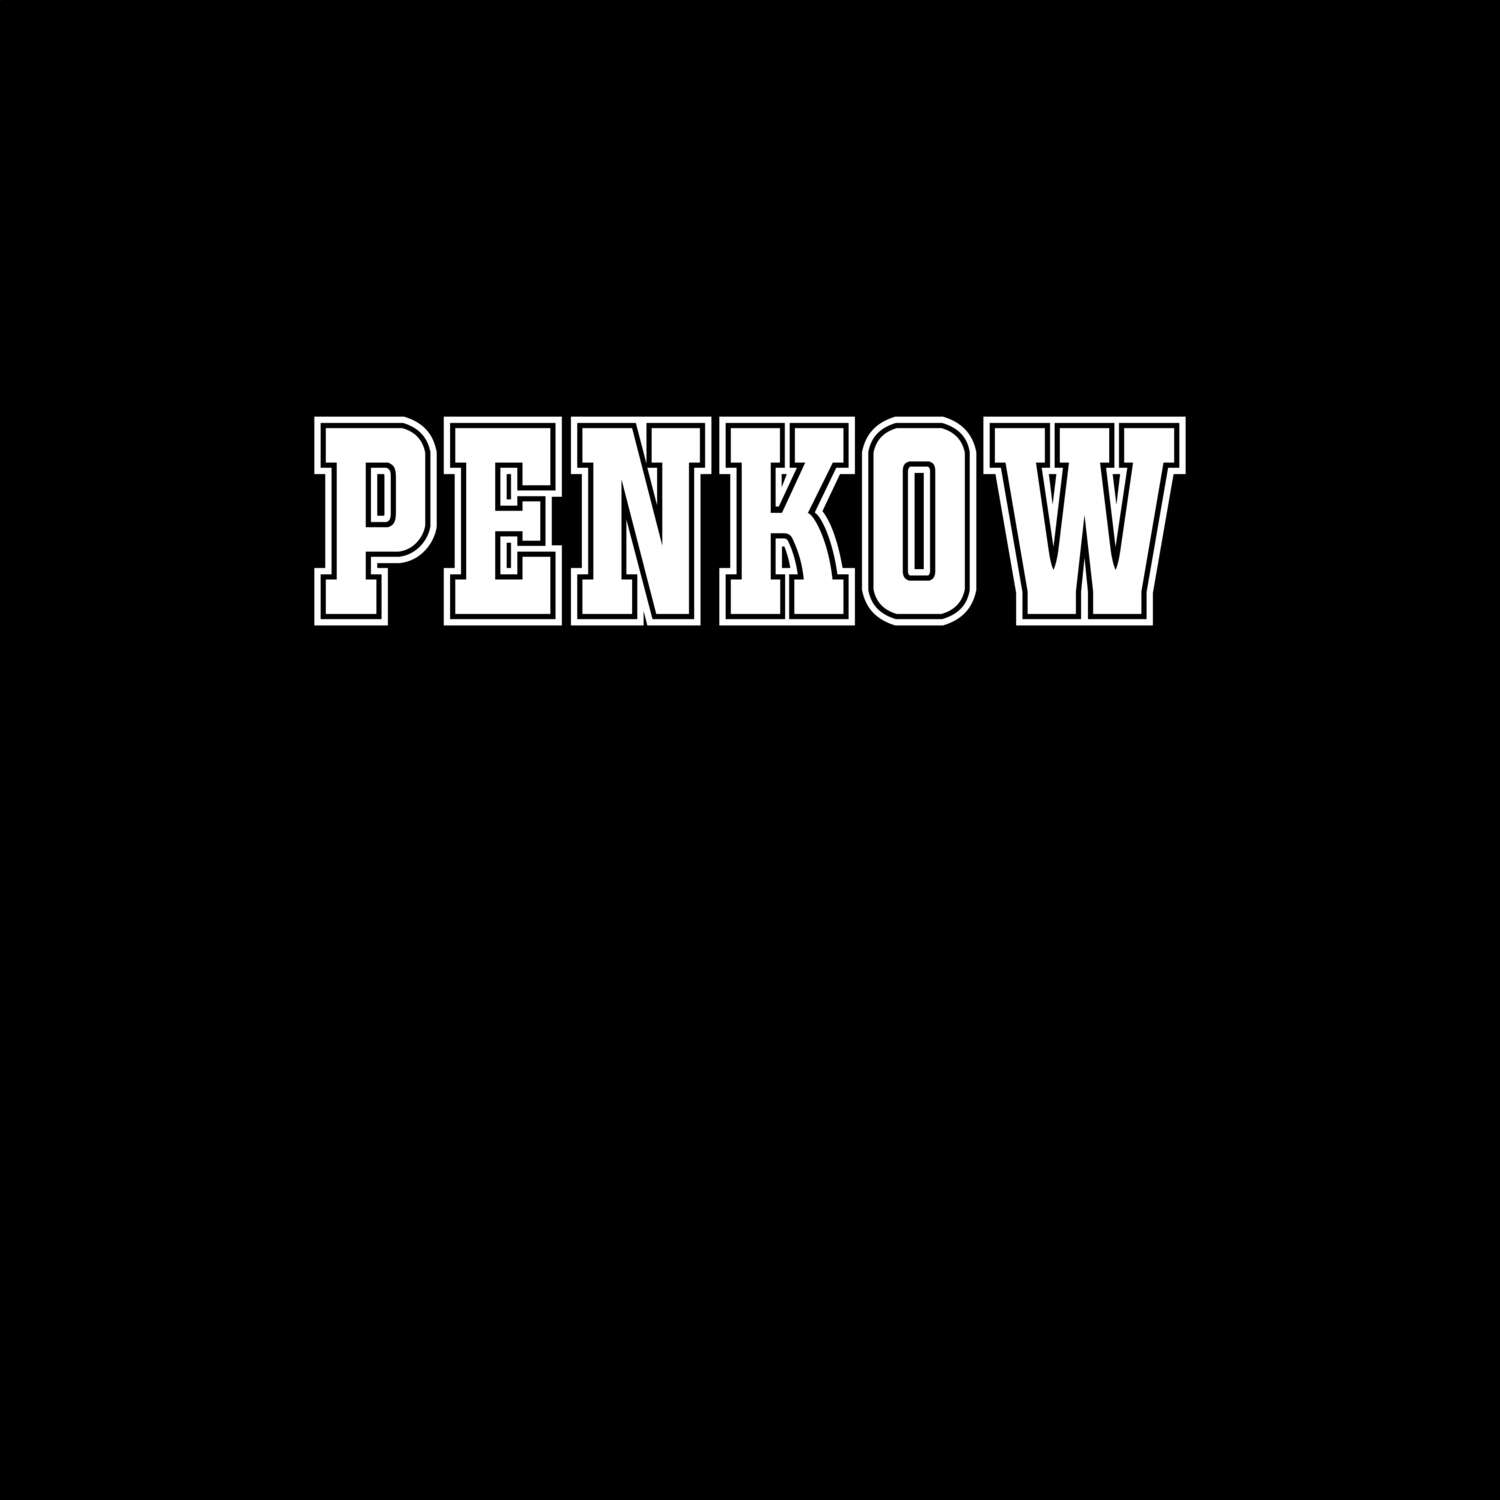 Penkow T-Shirt »Classic«